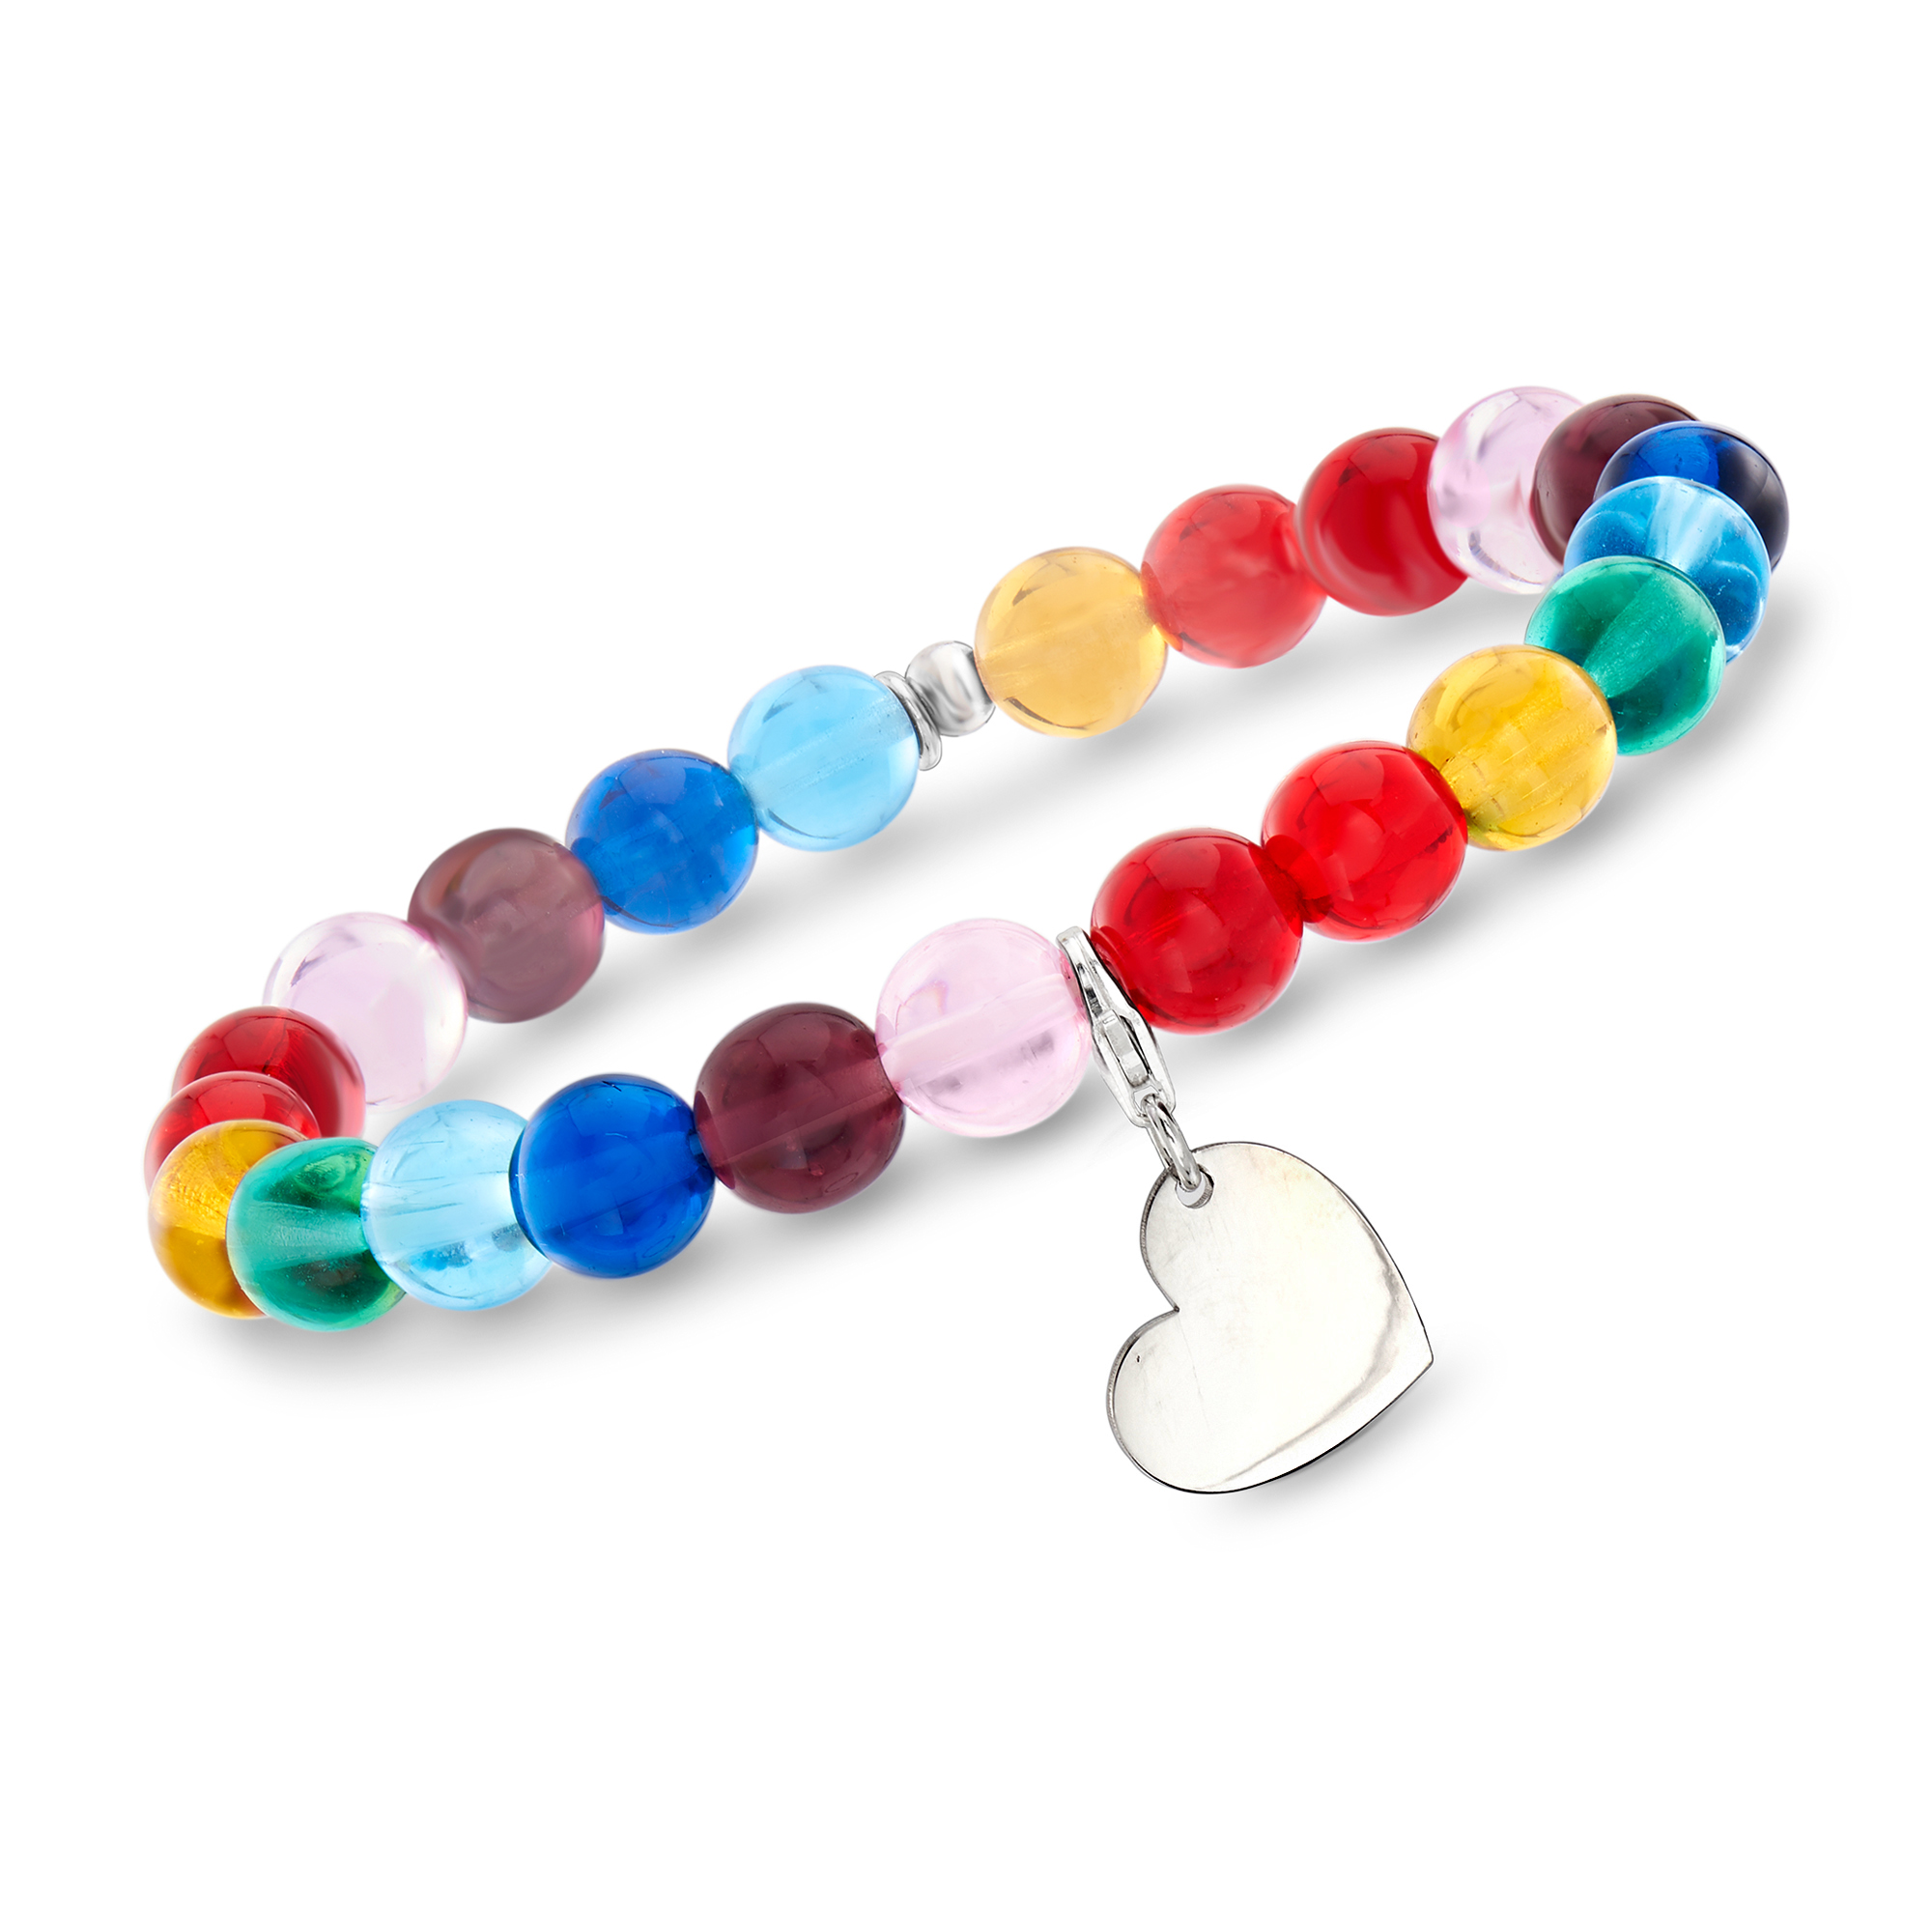 Men's Bracelet with Lava Pearls and Murano Glass - Amber Gradation Color |  Rebollo srl